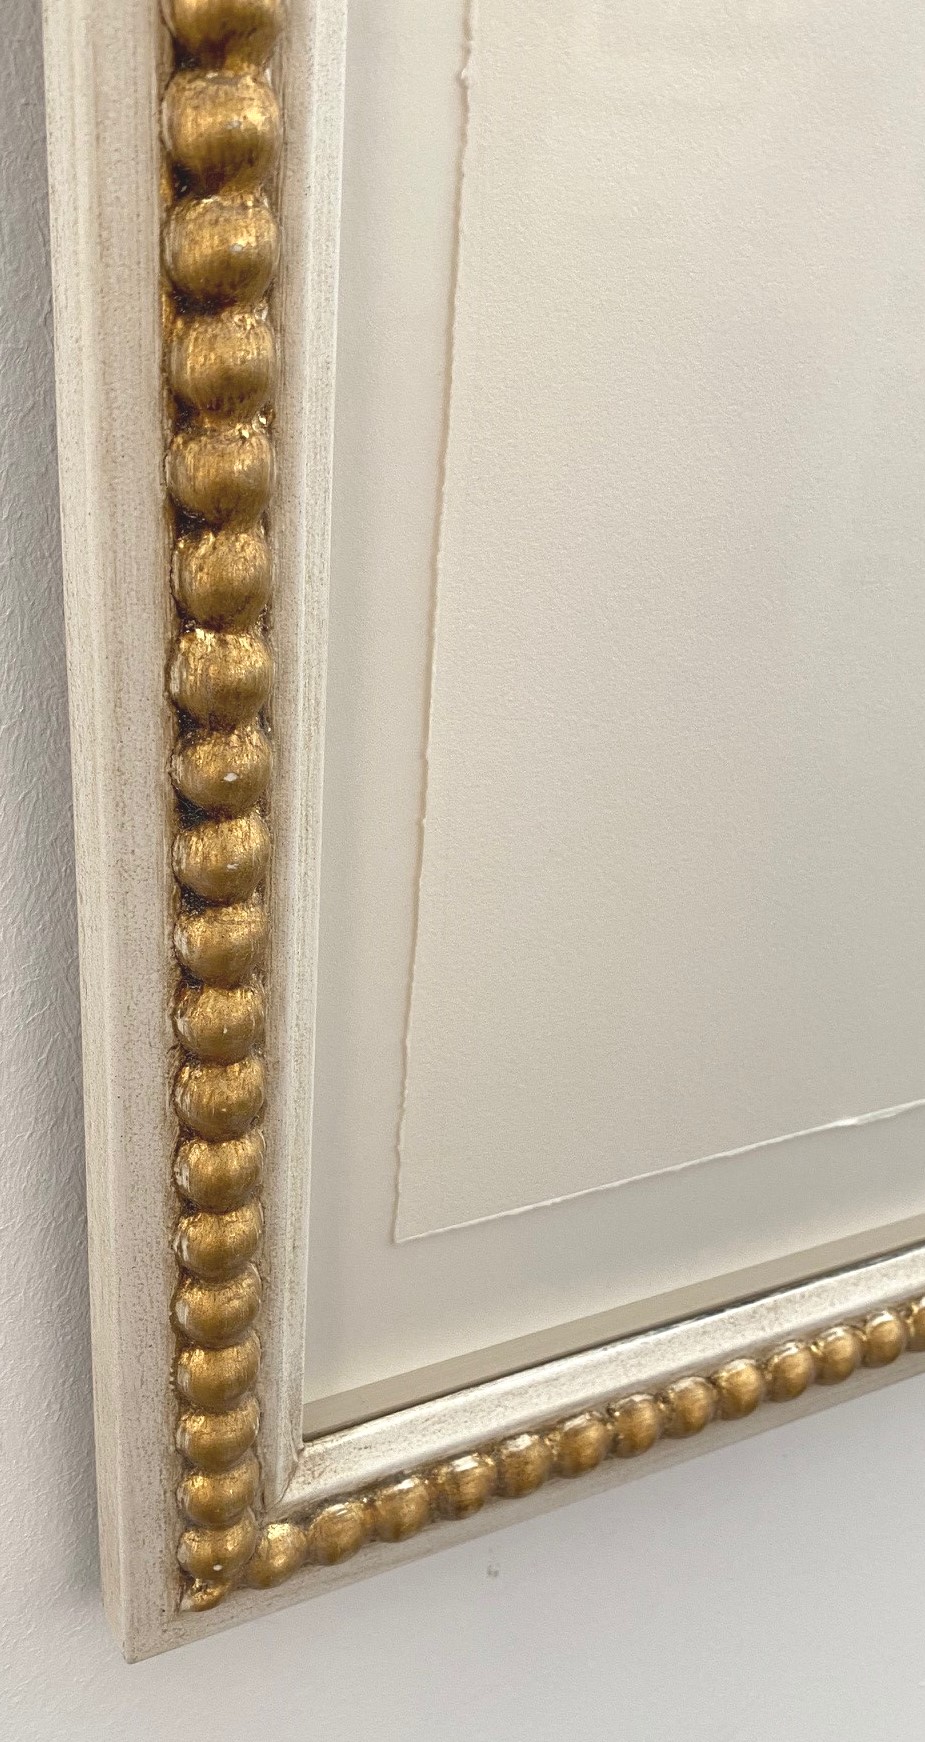 Zahara con Collar Perlas - Alma Mater 2020, gerahmt